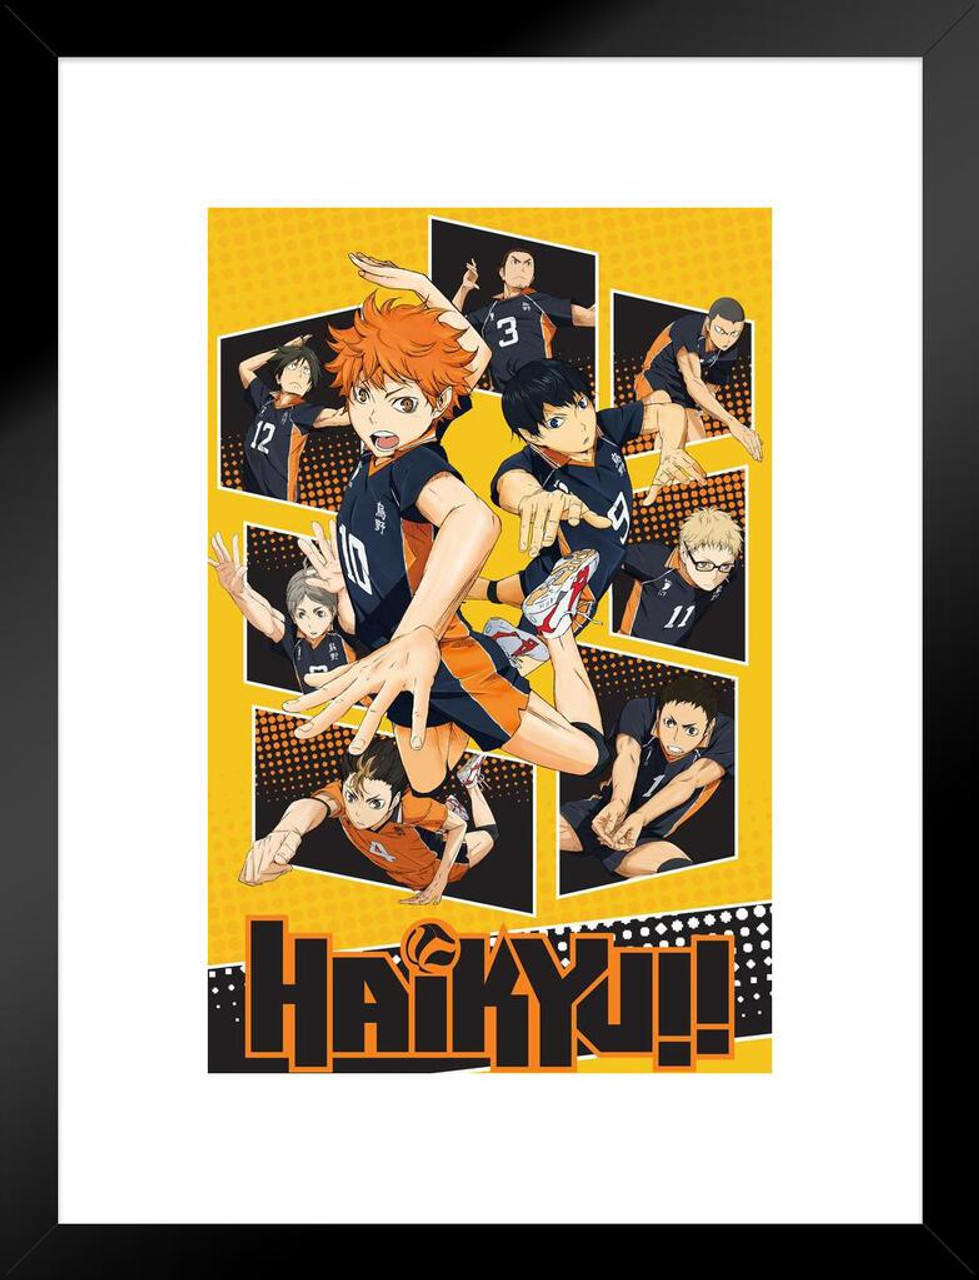  Haikyuu Merch Poster Karasuno High School Flag Anime Stuff  Haikyuu Manga Haikyu Volleyball Anime Poster Crunchyroll Streaming Anime  Merch Animated Series Show Cool Wall Decor Art Print Poster 36x12: Posters 